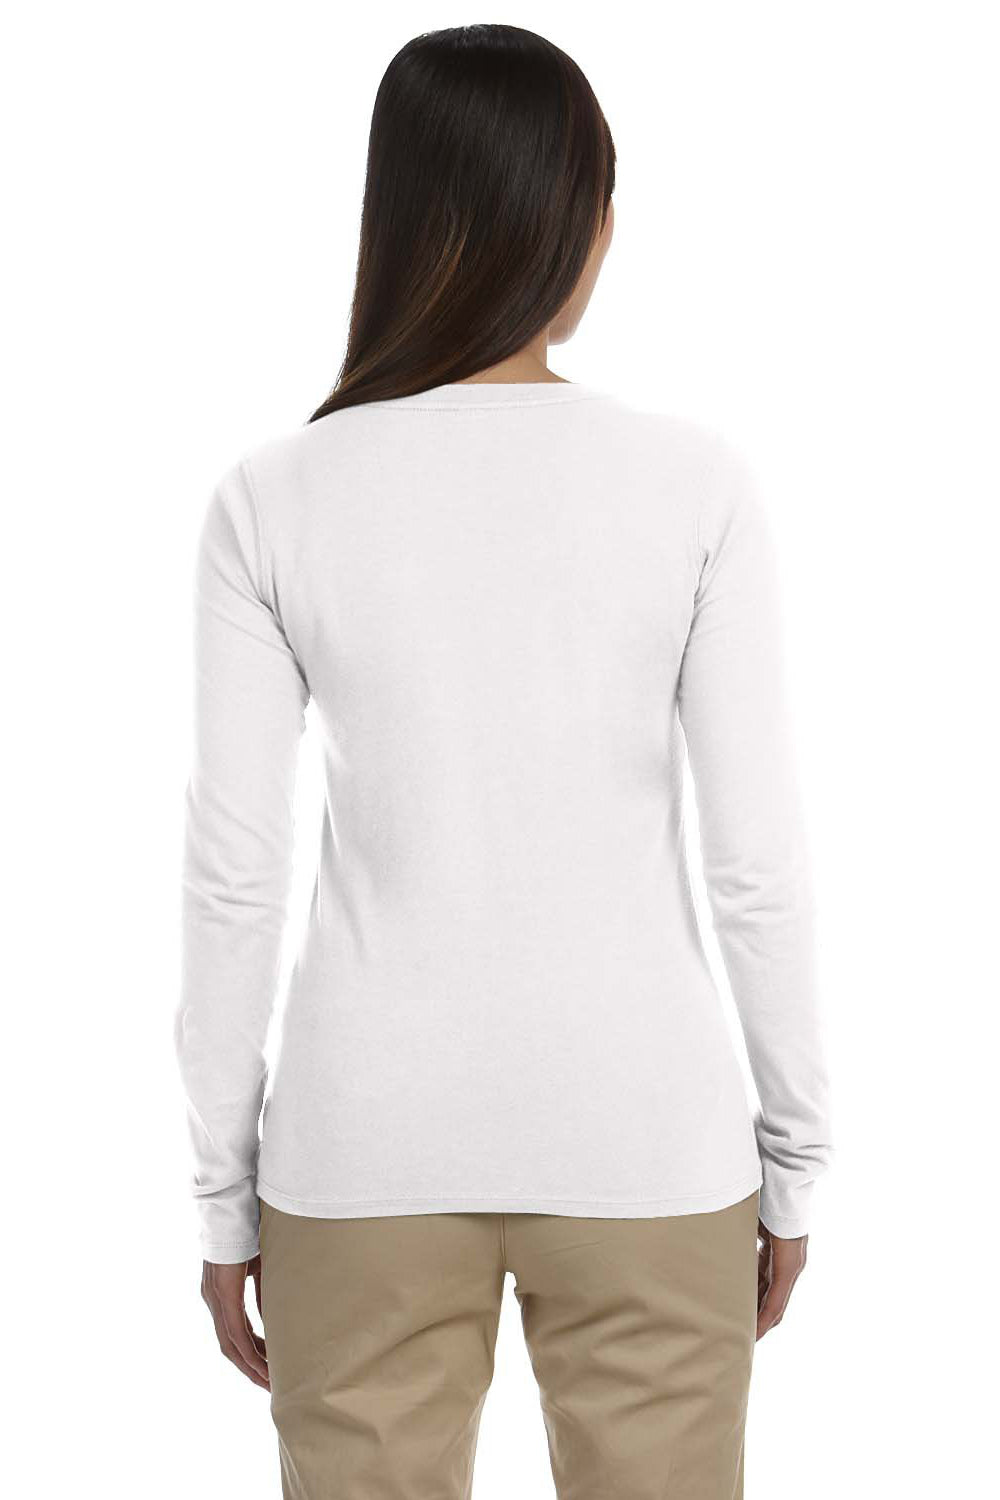 Econscious EC3500 Womens Long Sleeve Crewneck T-Shirt White Back